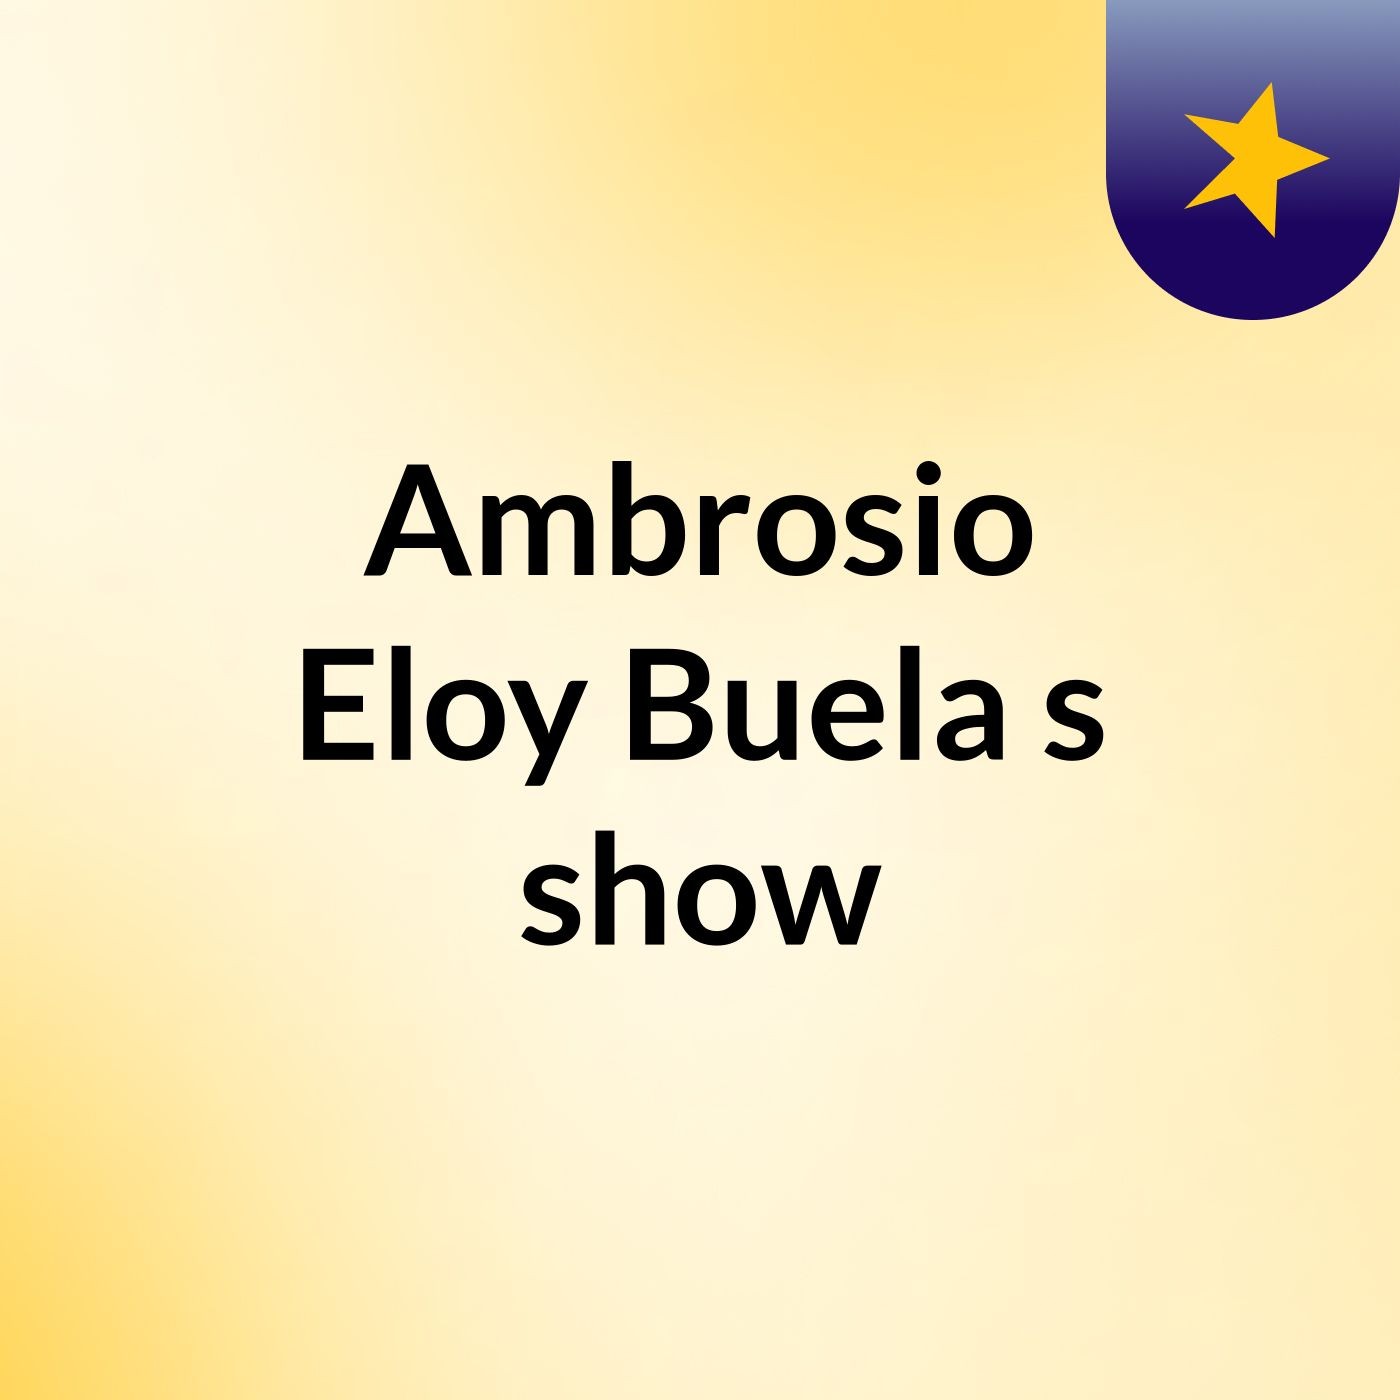 Ambrosio Eloy Buela's show